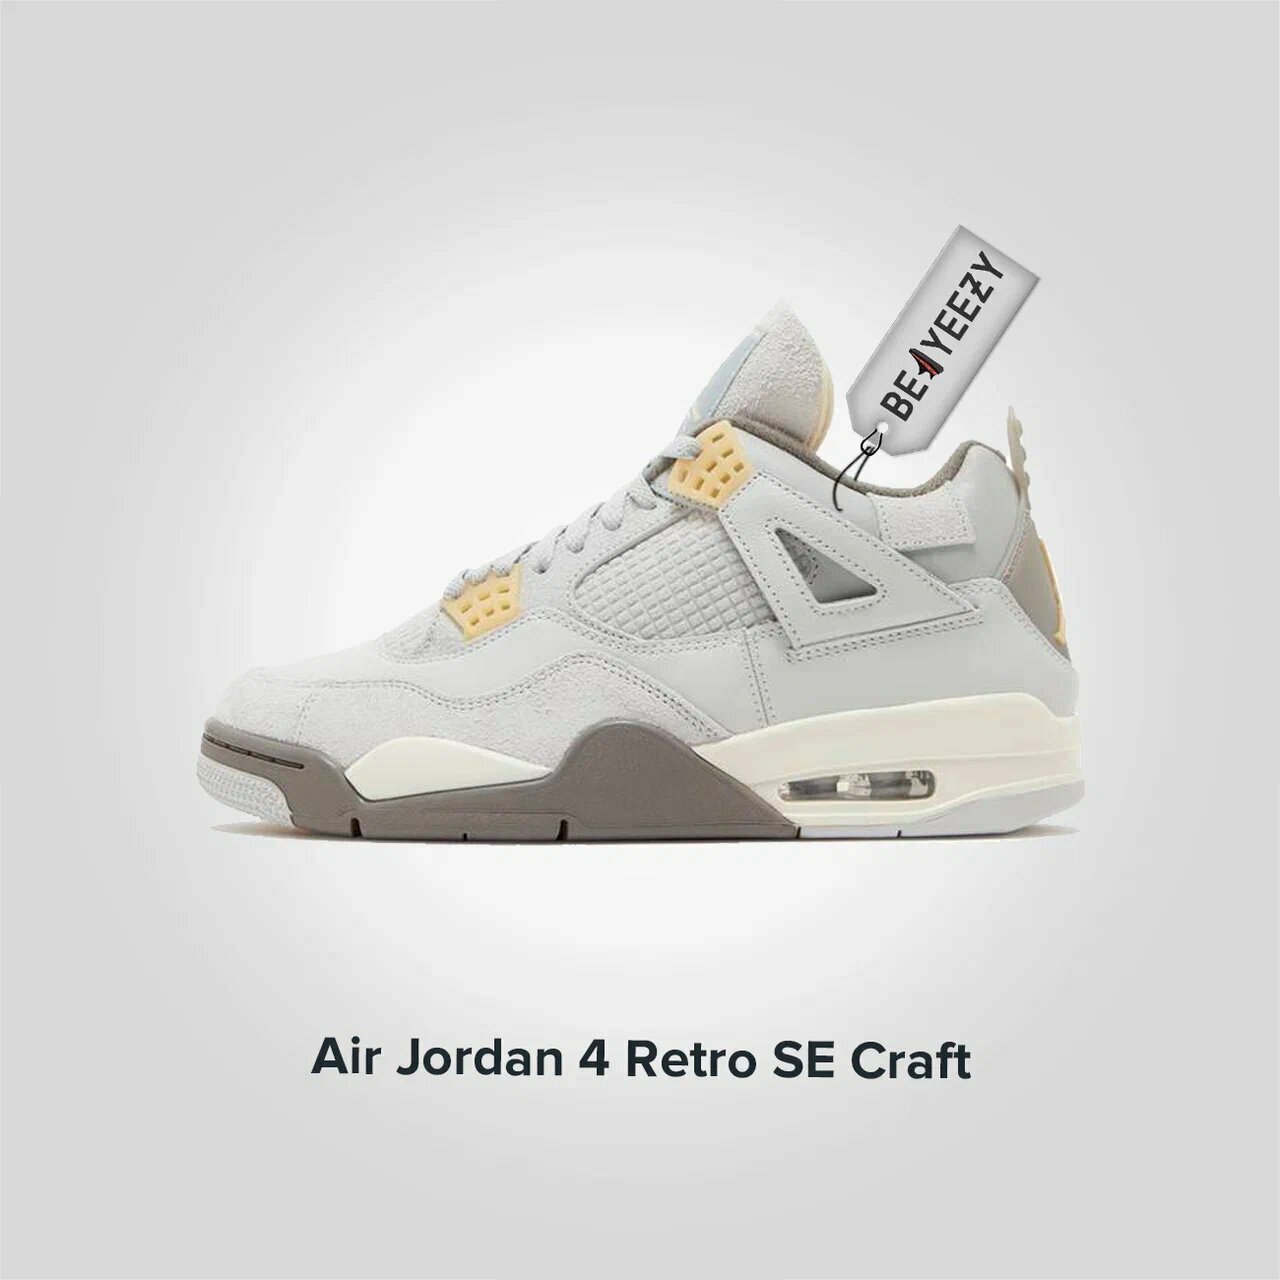 Jordan 4 Retro SE Craft